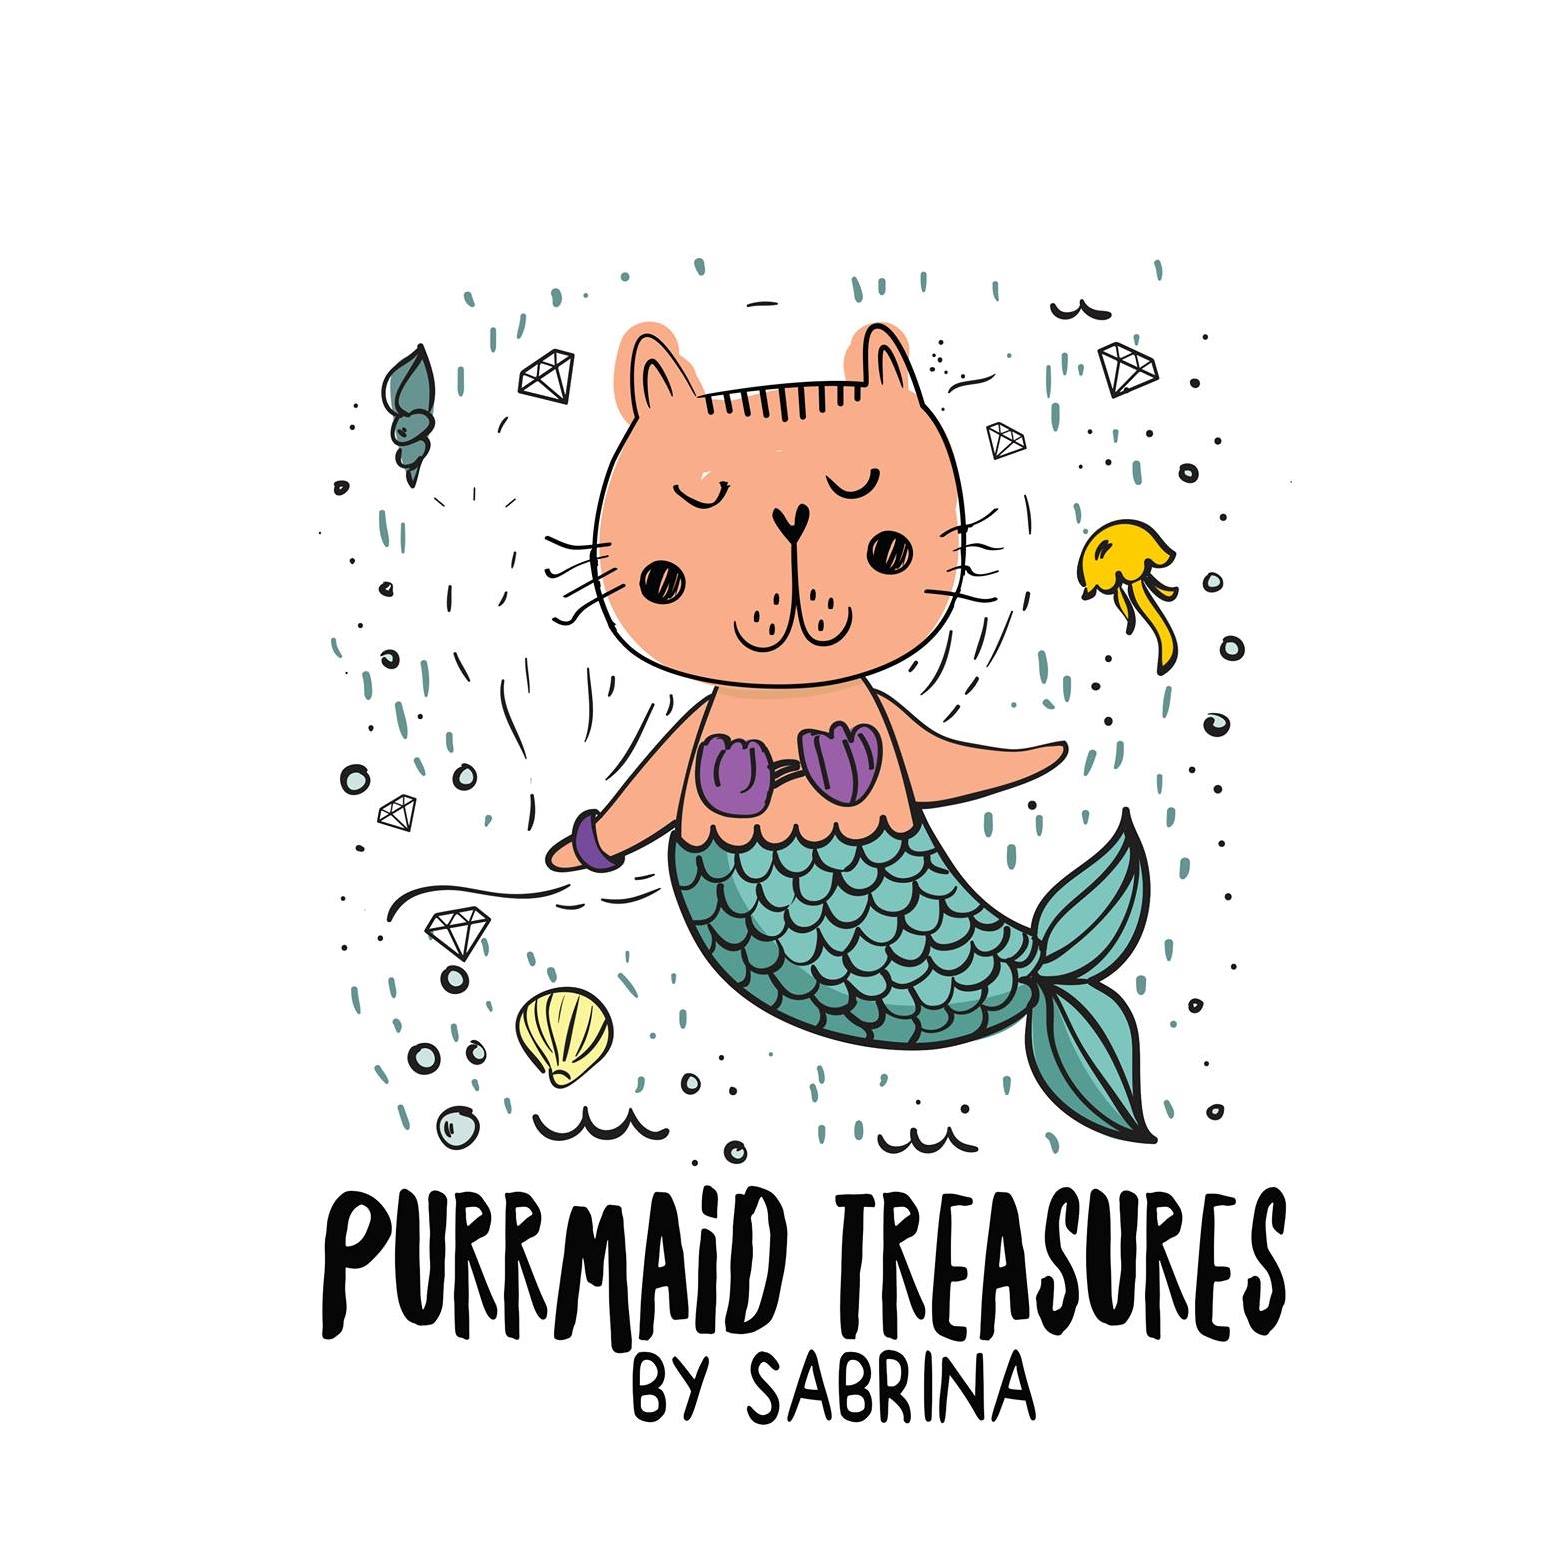 Purrmaid Treasures by Sabrina